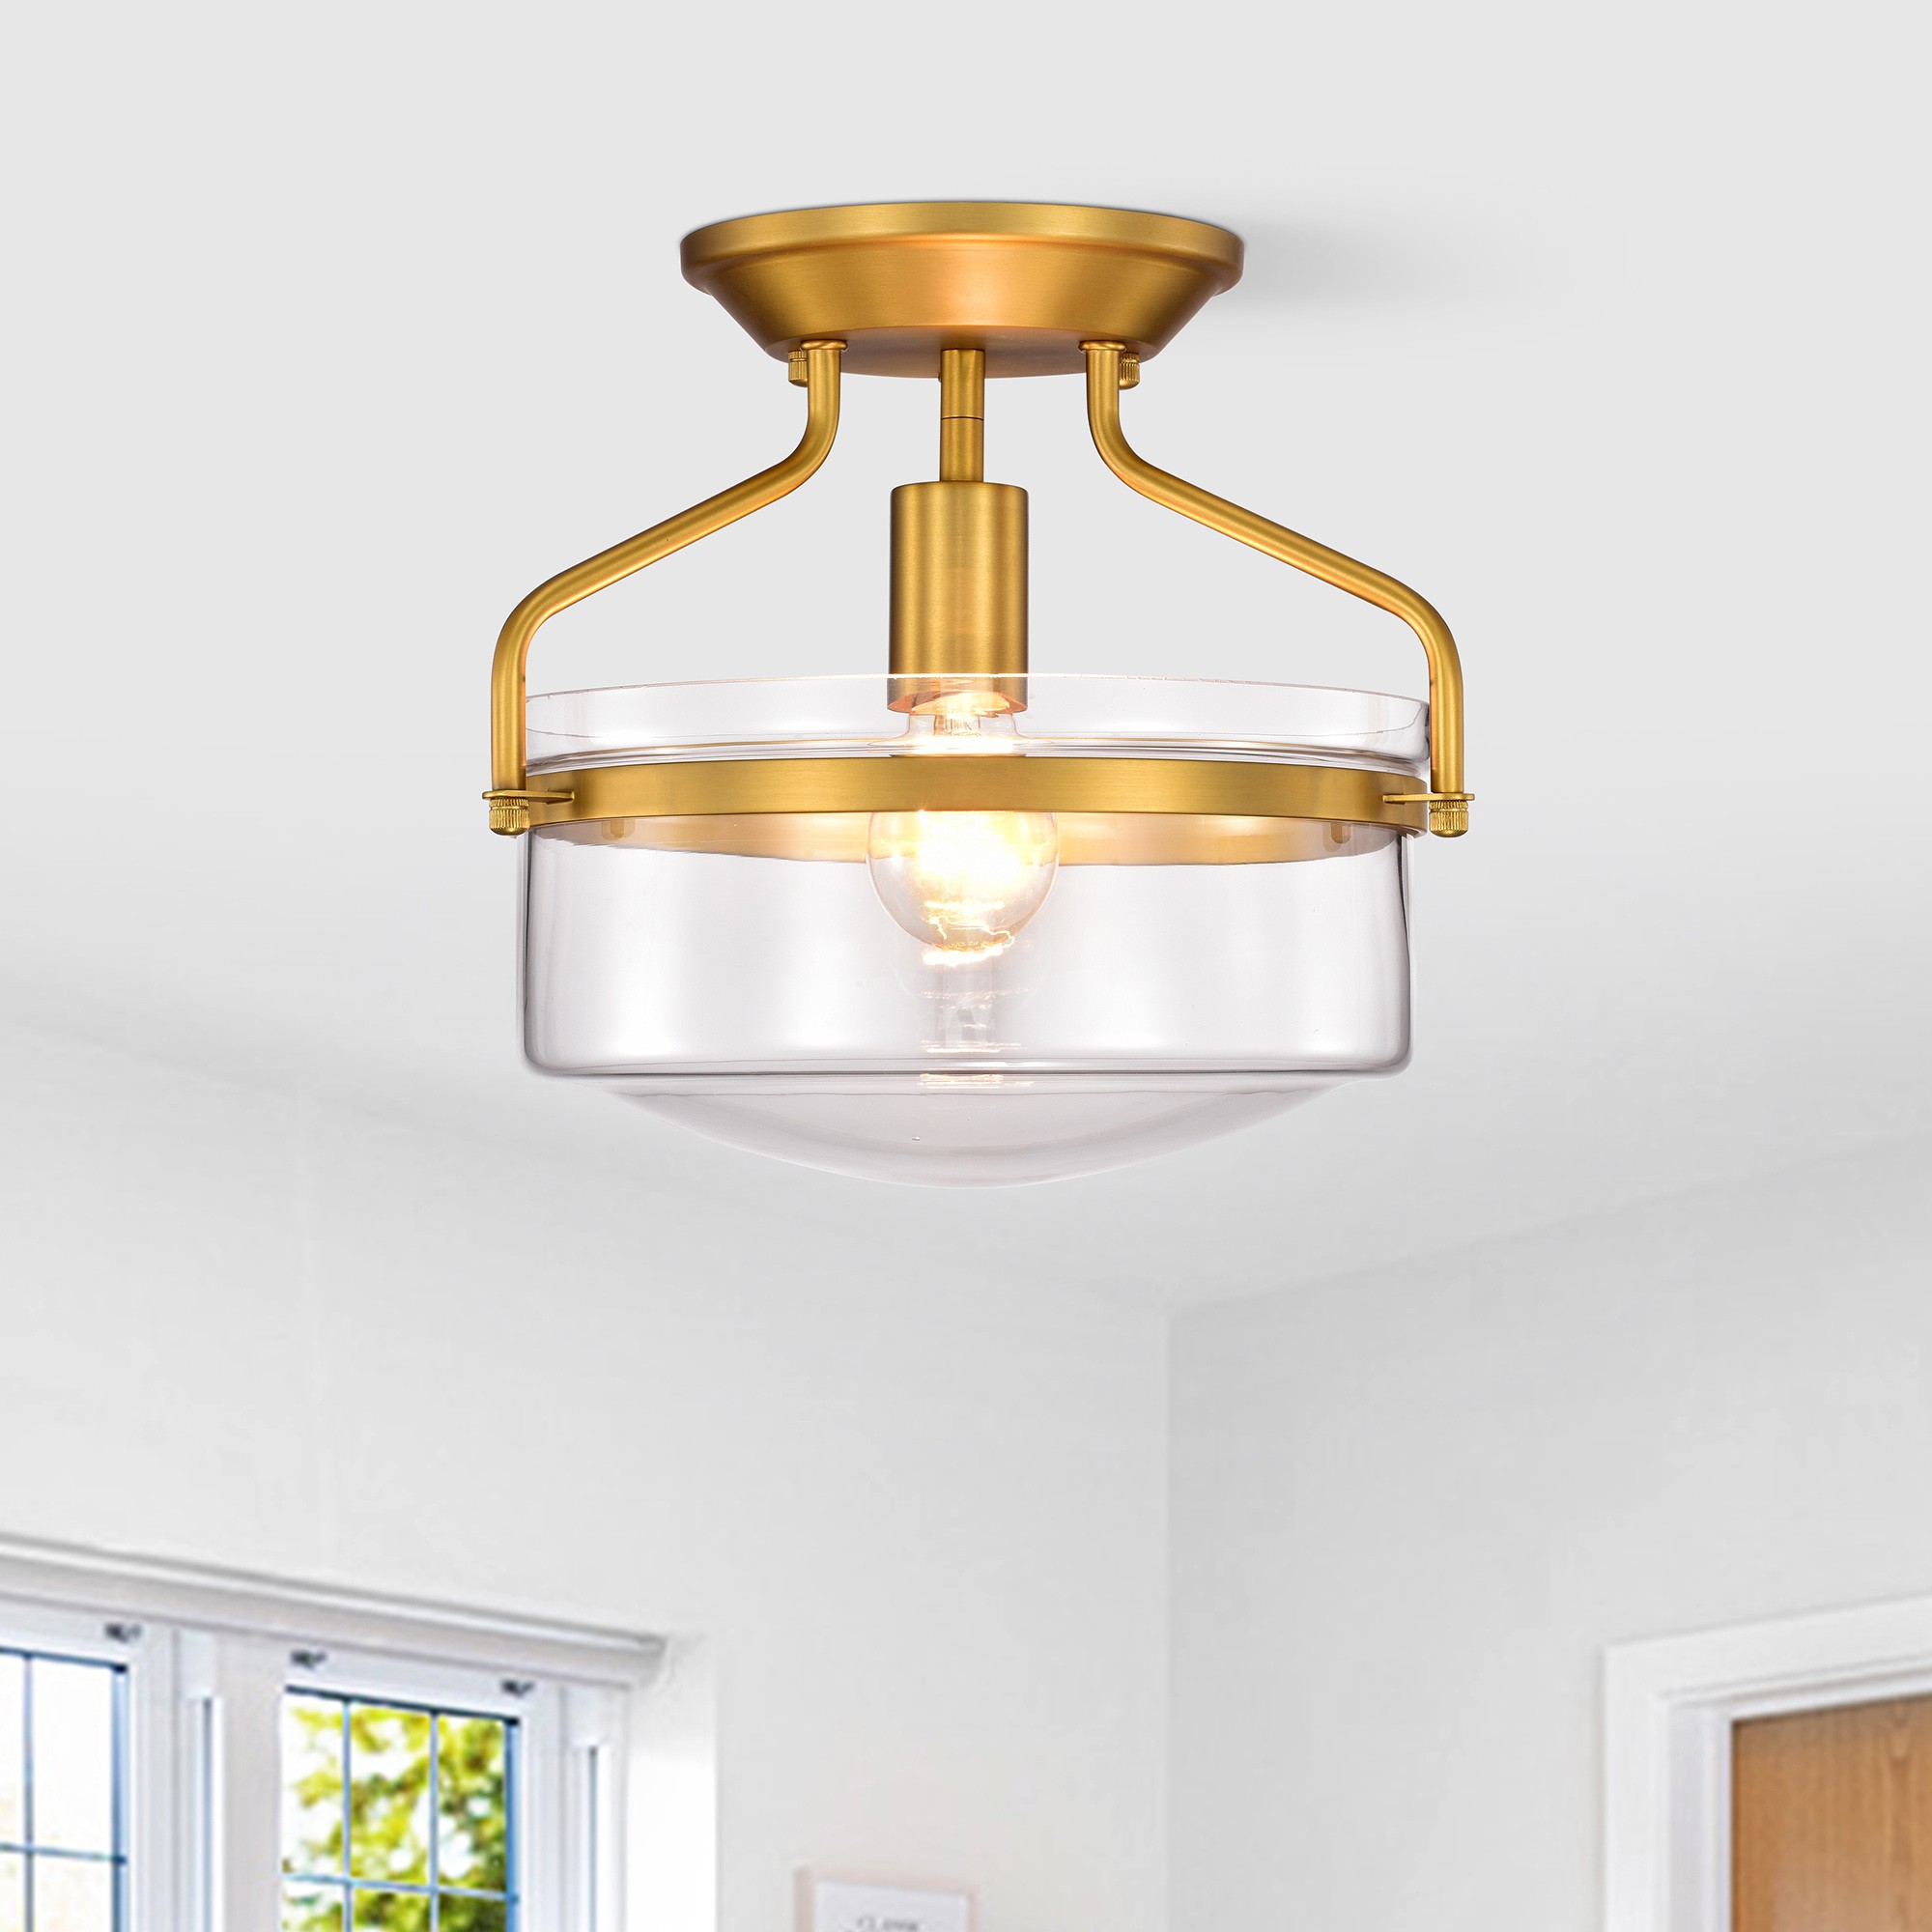 Byron 13 in. 1-Light Indoor Aged Brass Finish Semi-Flush Mount Ceiling Light with Light Kit